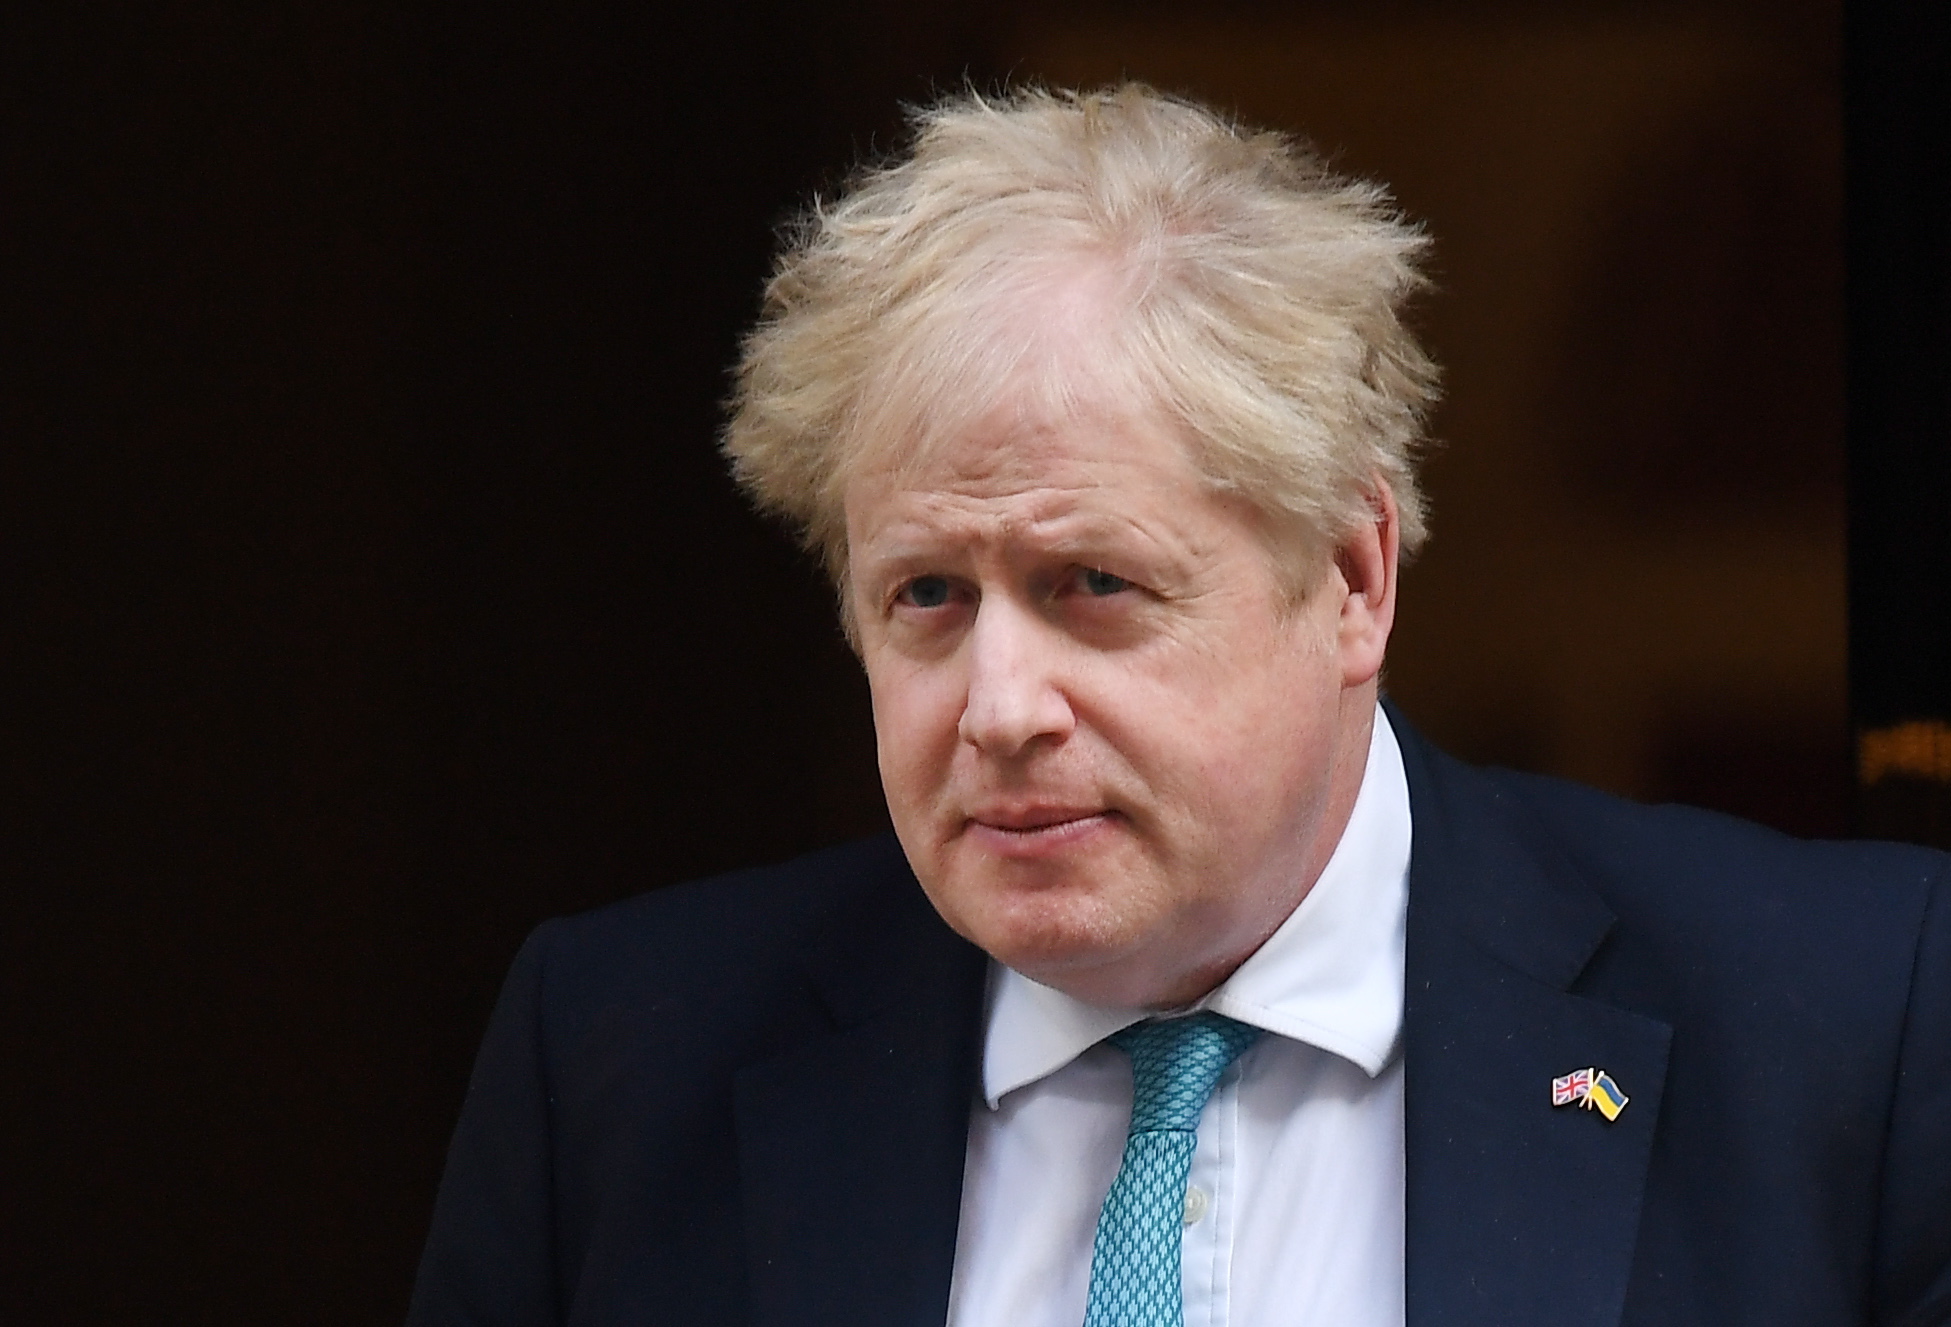 Diputado pidió la dimisión de Boris Johnson en Twitter mientras lo interrogaba